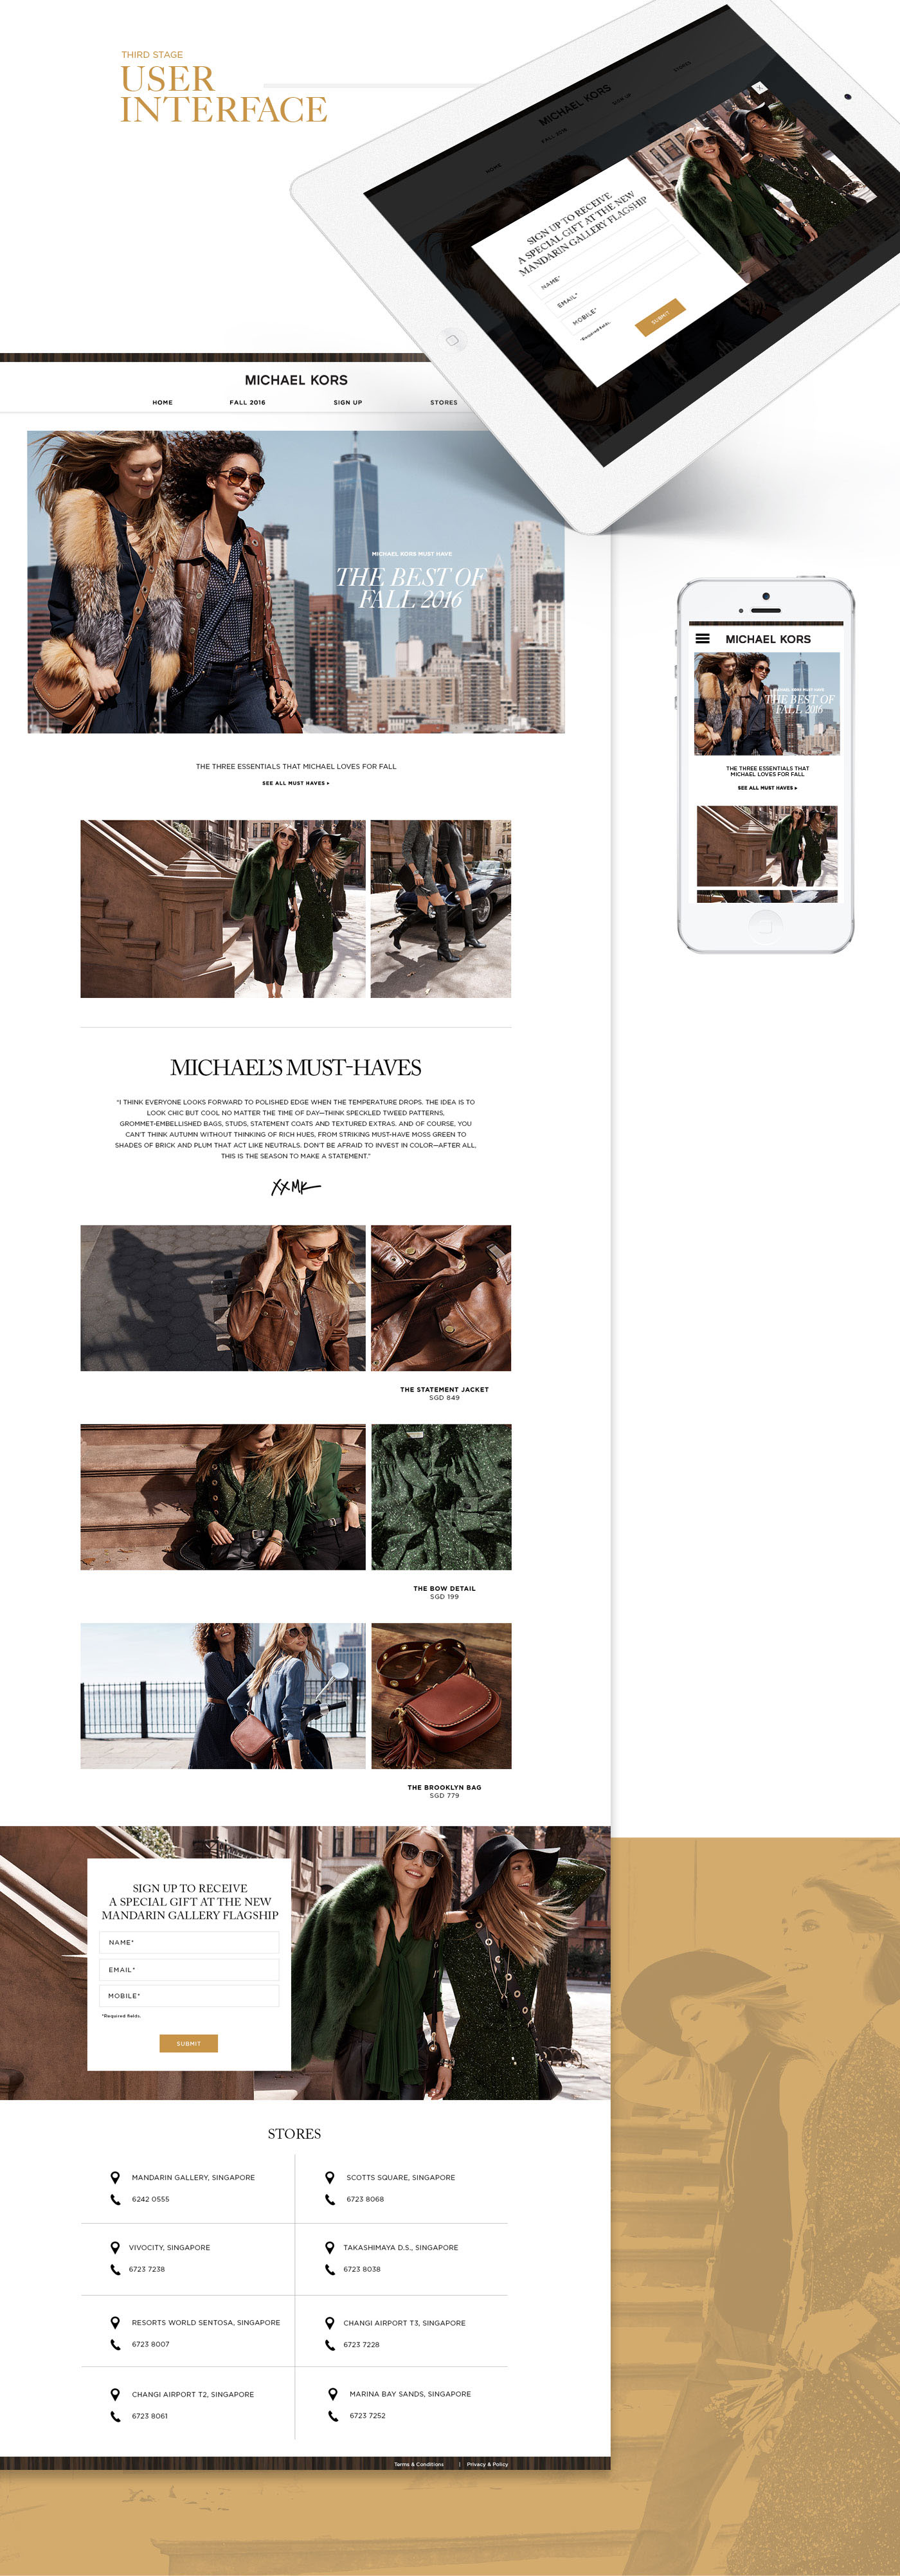 michael kors Fashion  Luxury Fashion women fashion singapore lifestyle microsite Website Web Design  UI/UX